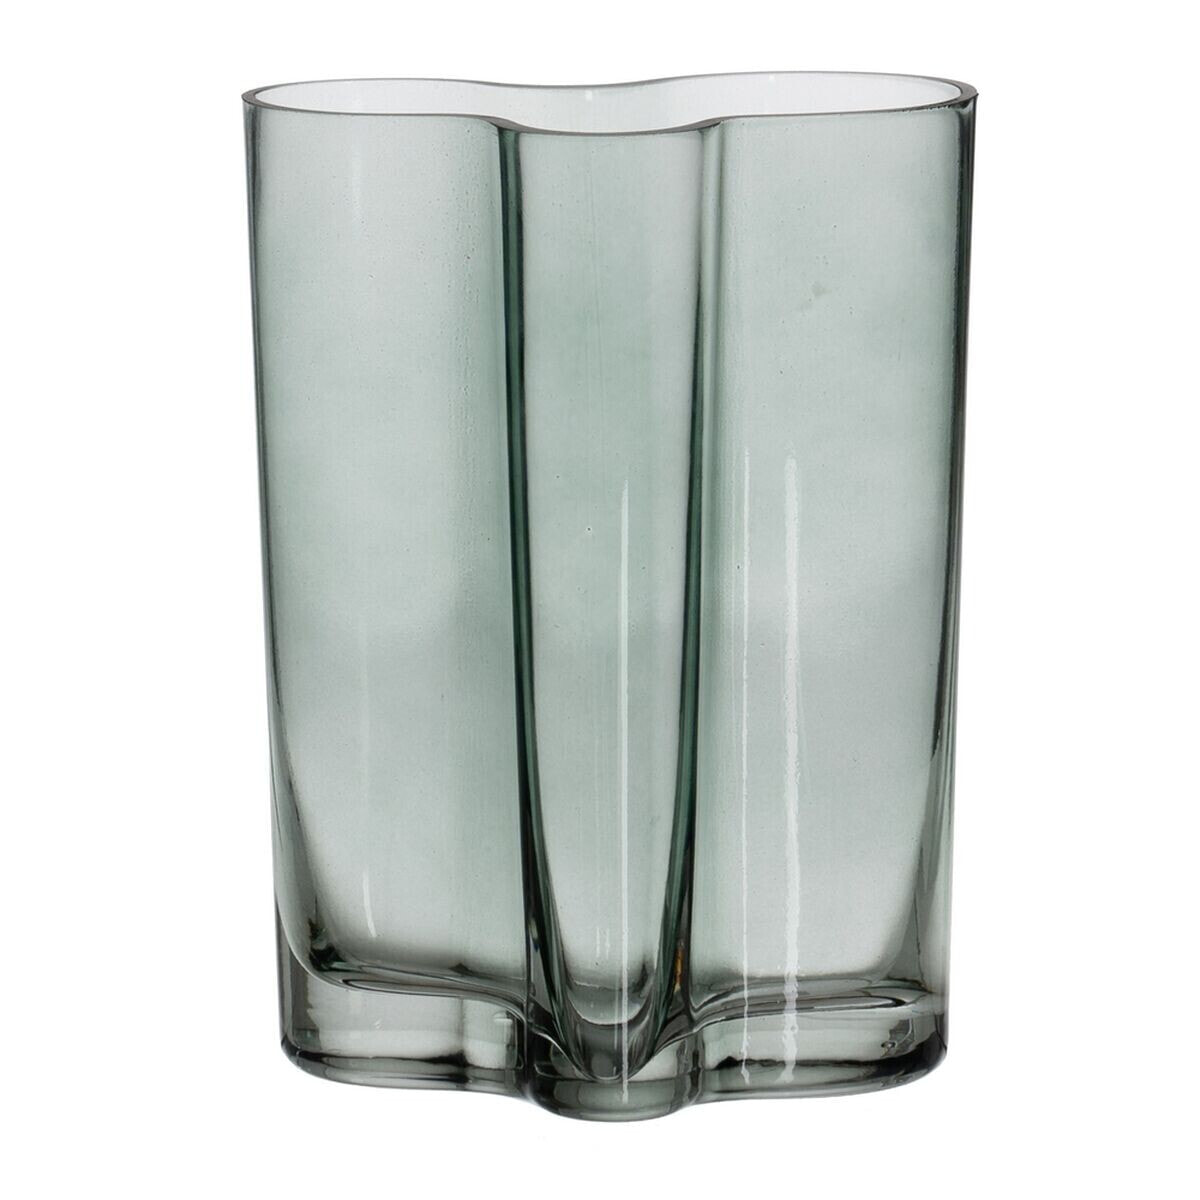 Vase Blue Crystal 15 x 9 x 20,5 cm